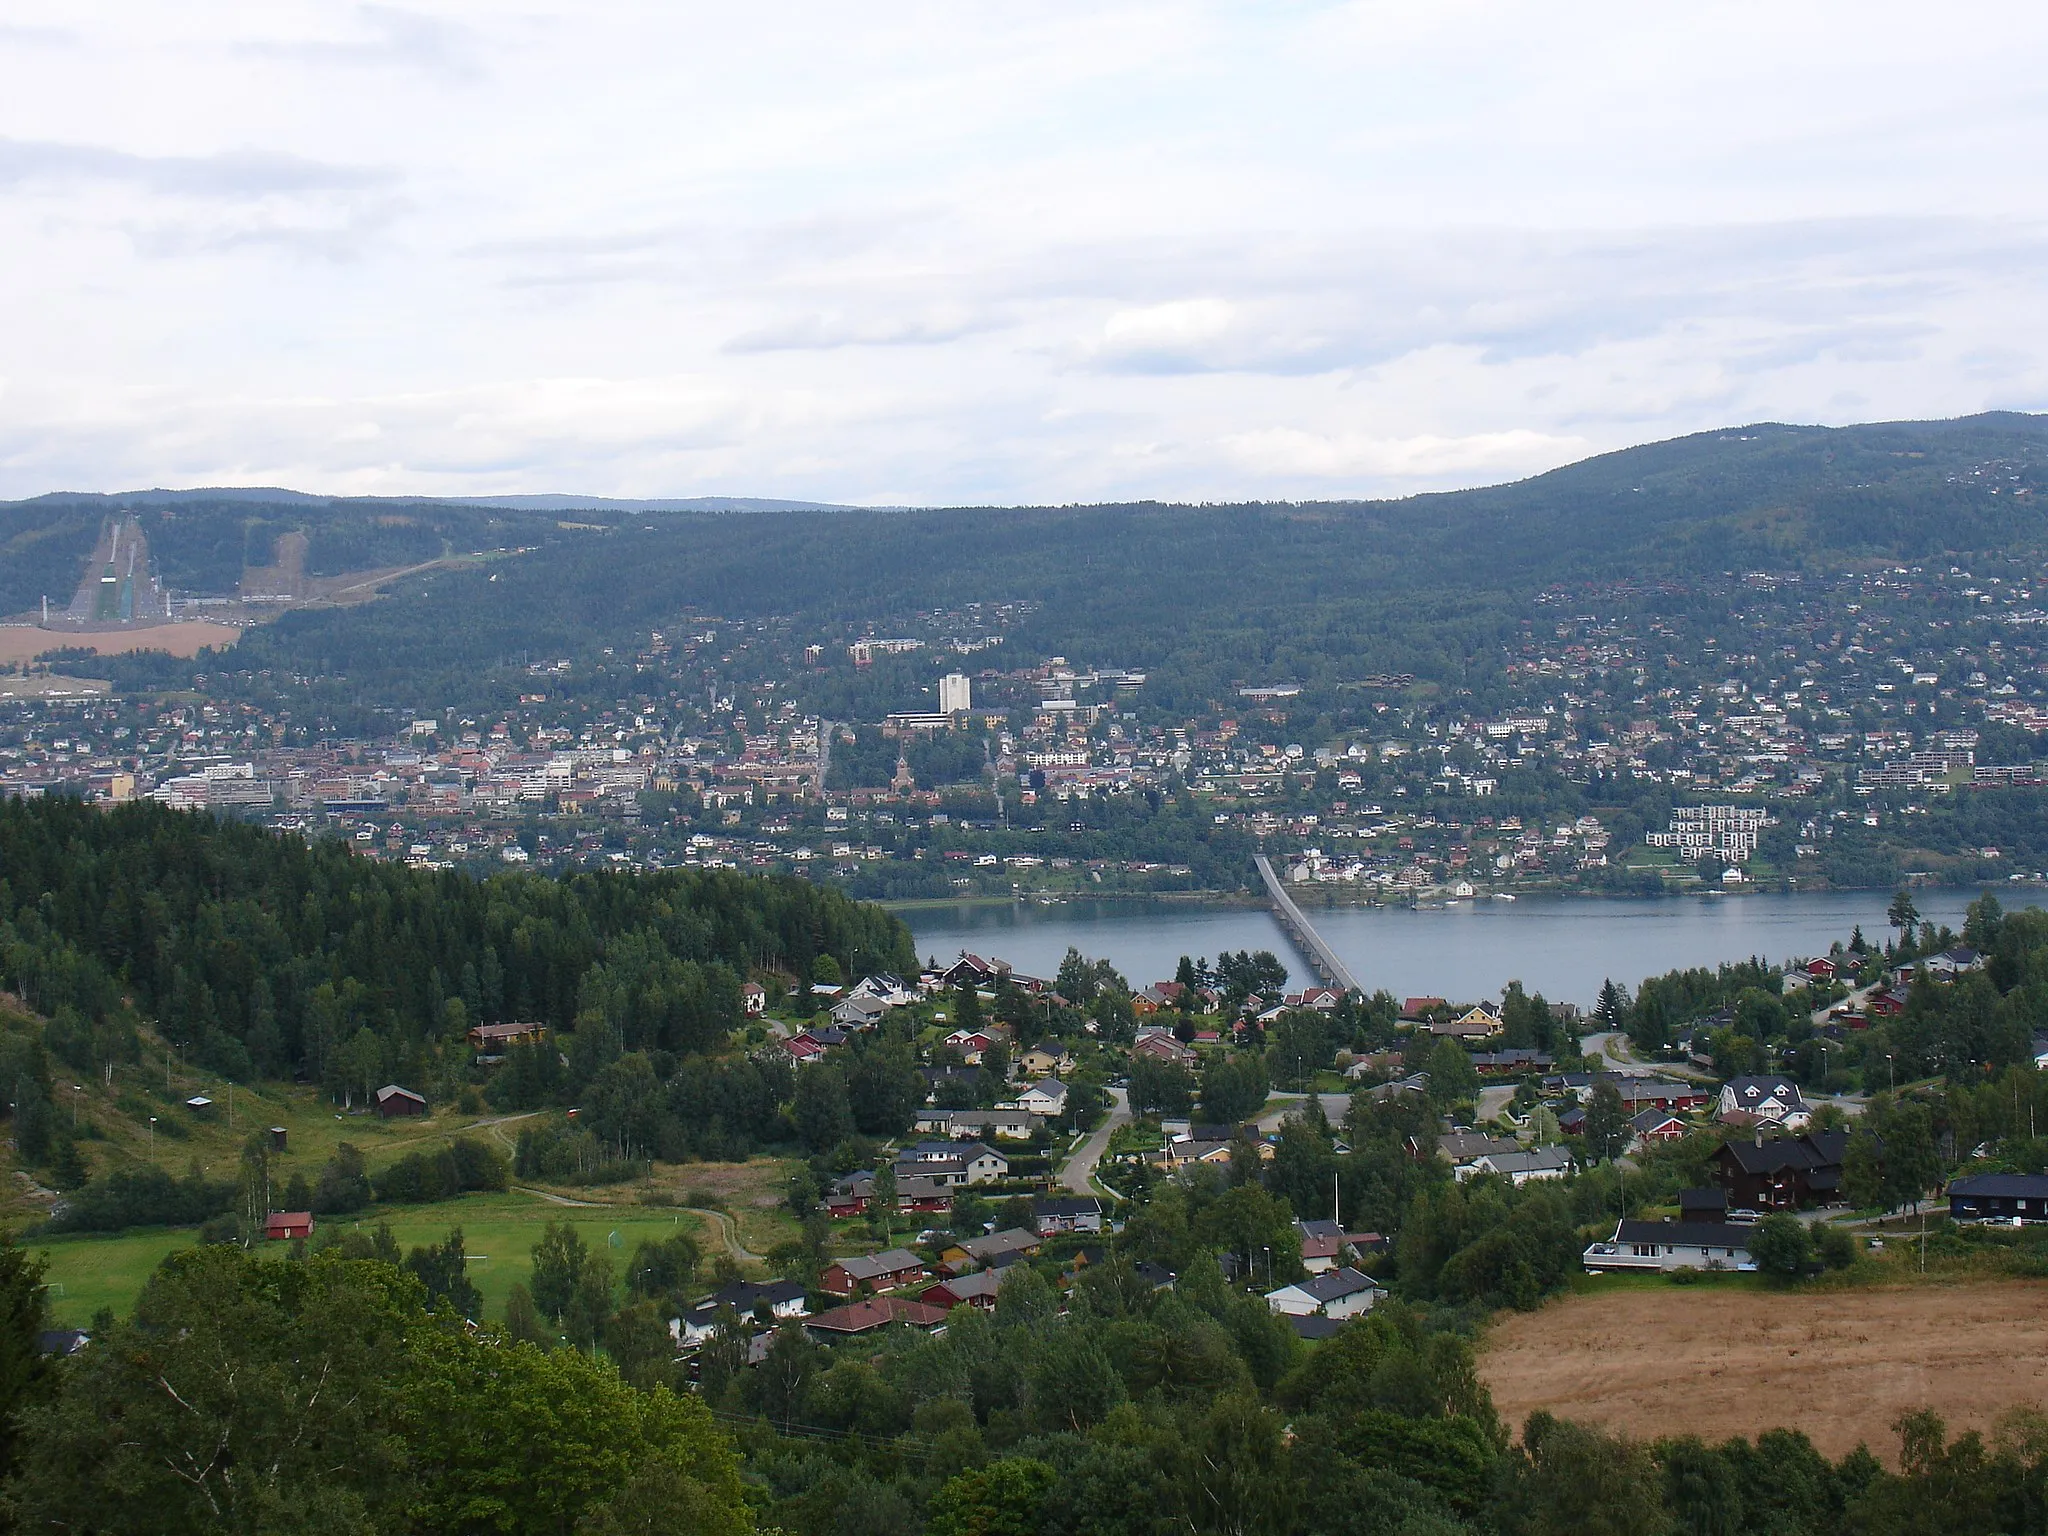 Image of Lillehammer